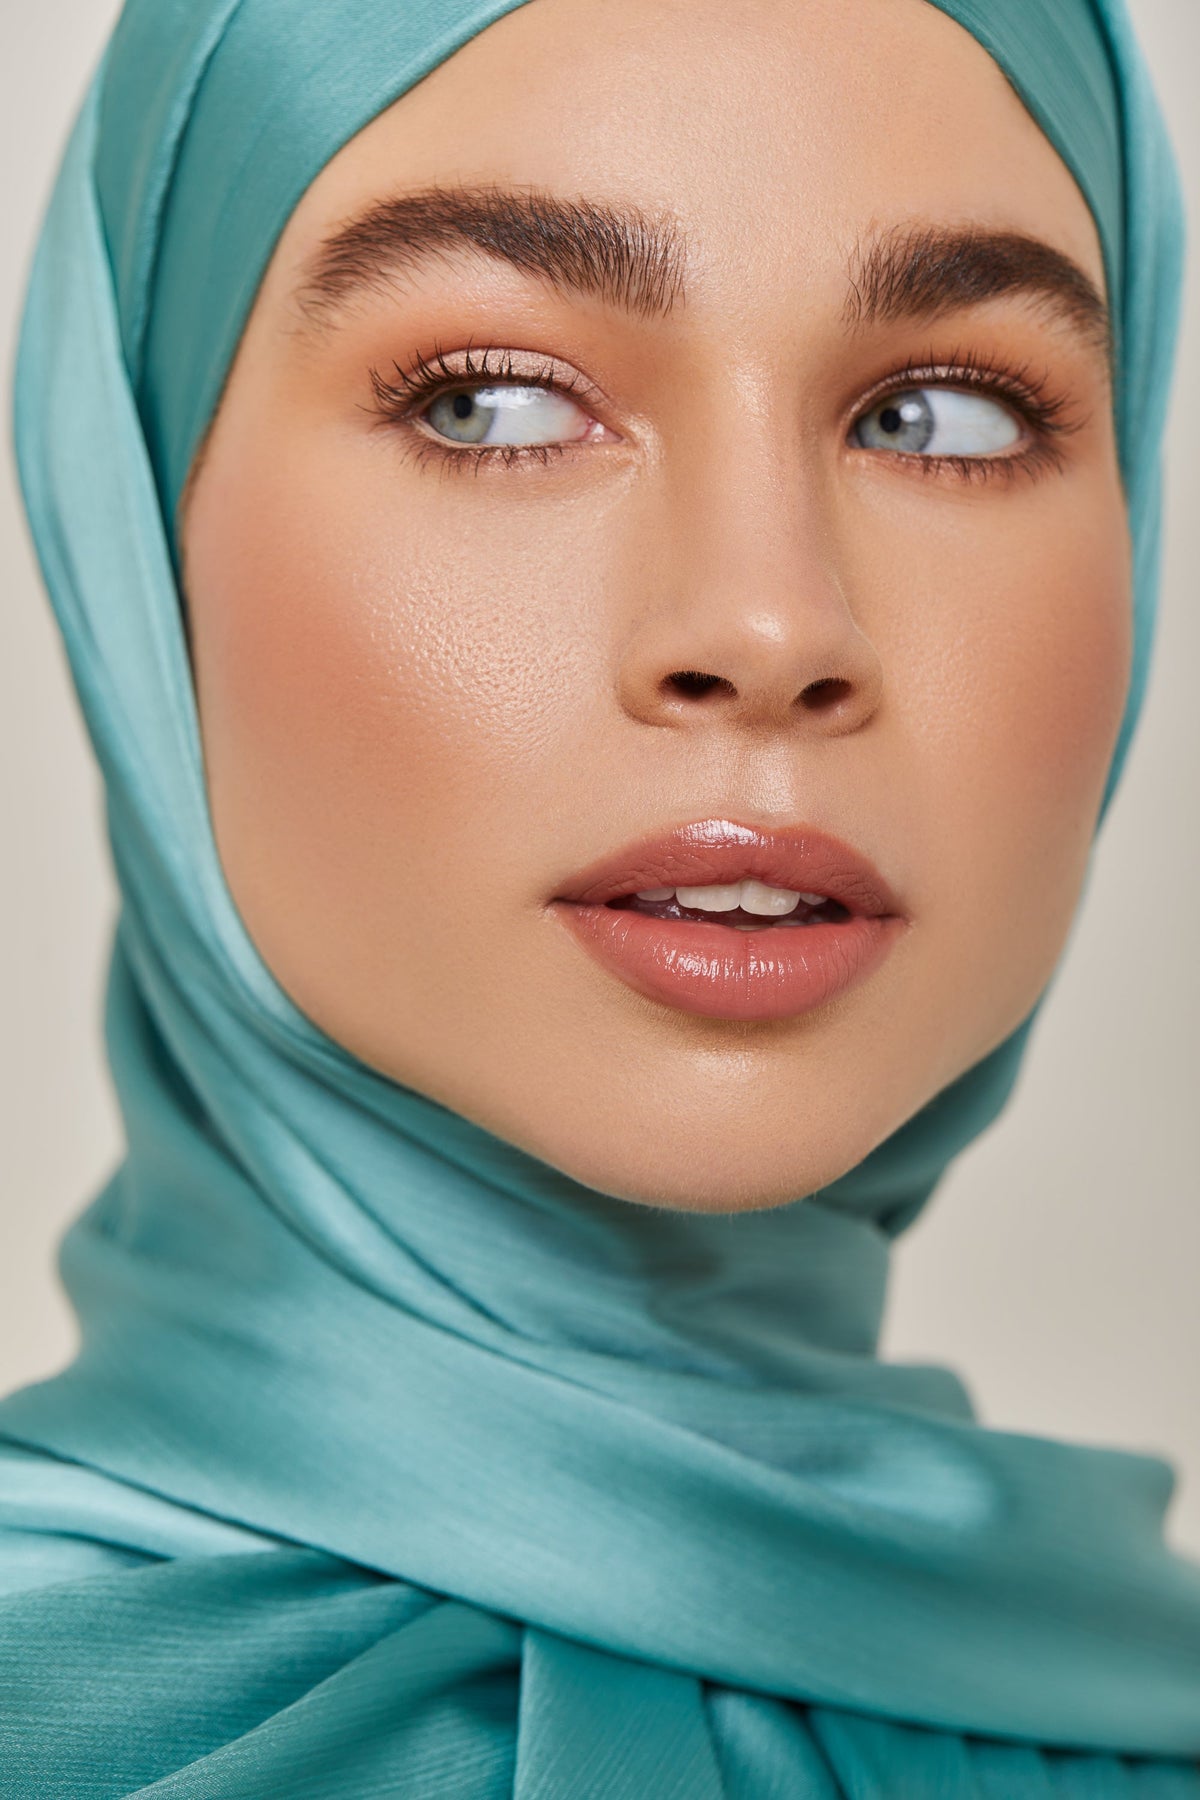 TEXTURE Satin Crepe Hijab - Wavelight Crepe epschoolboard 